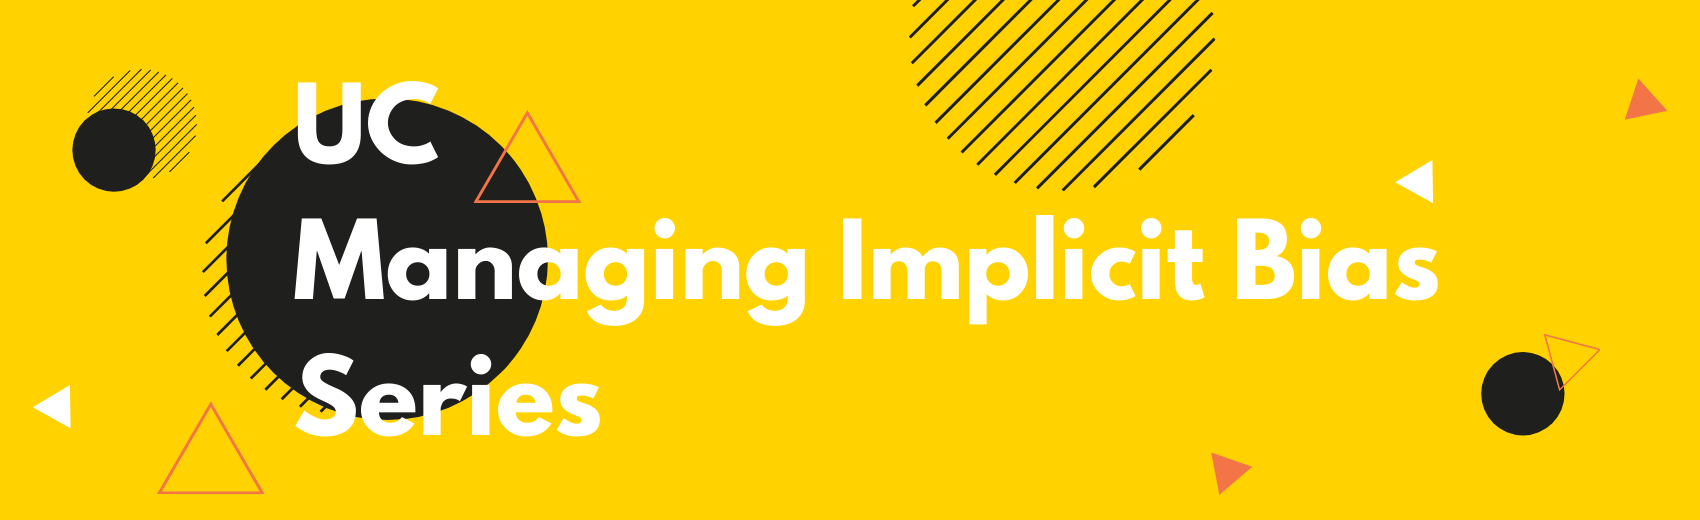 UC-Managing-Implicit-Bias-Series-Banner.png